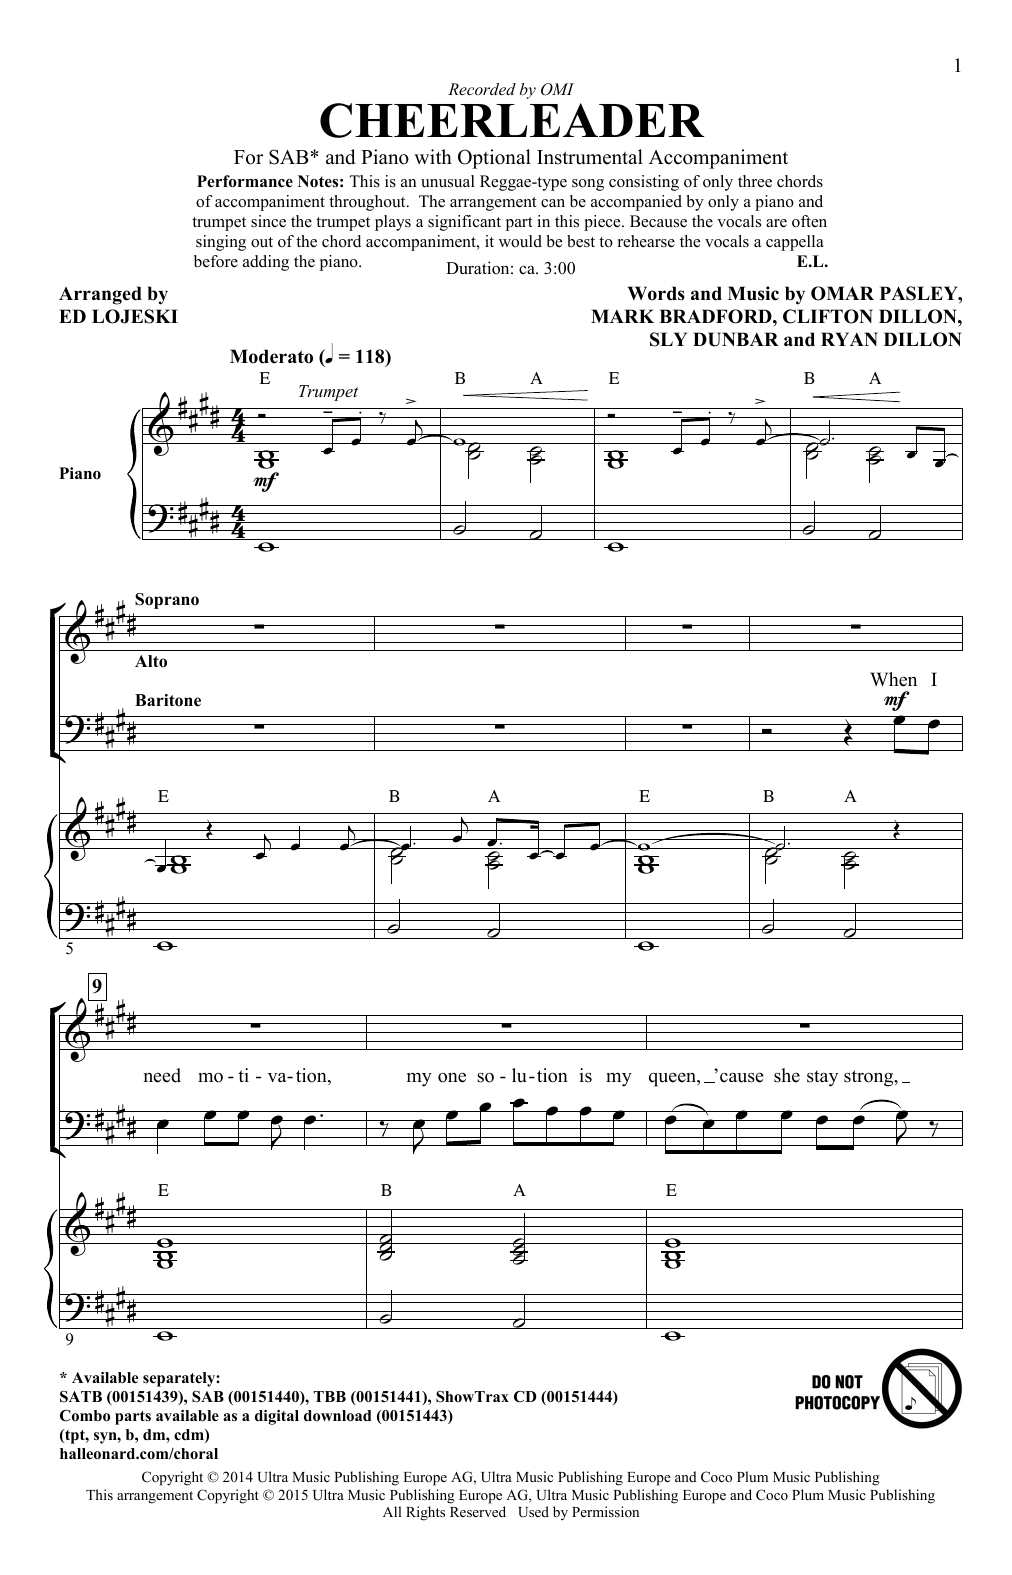 OMI Cheerleader (arr. Ed Lojeski) Sheet Music Notes & Chords for SATB - Download or Print PDF